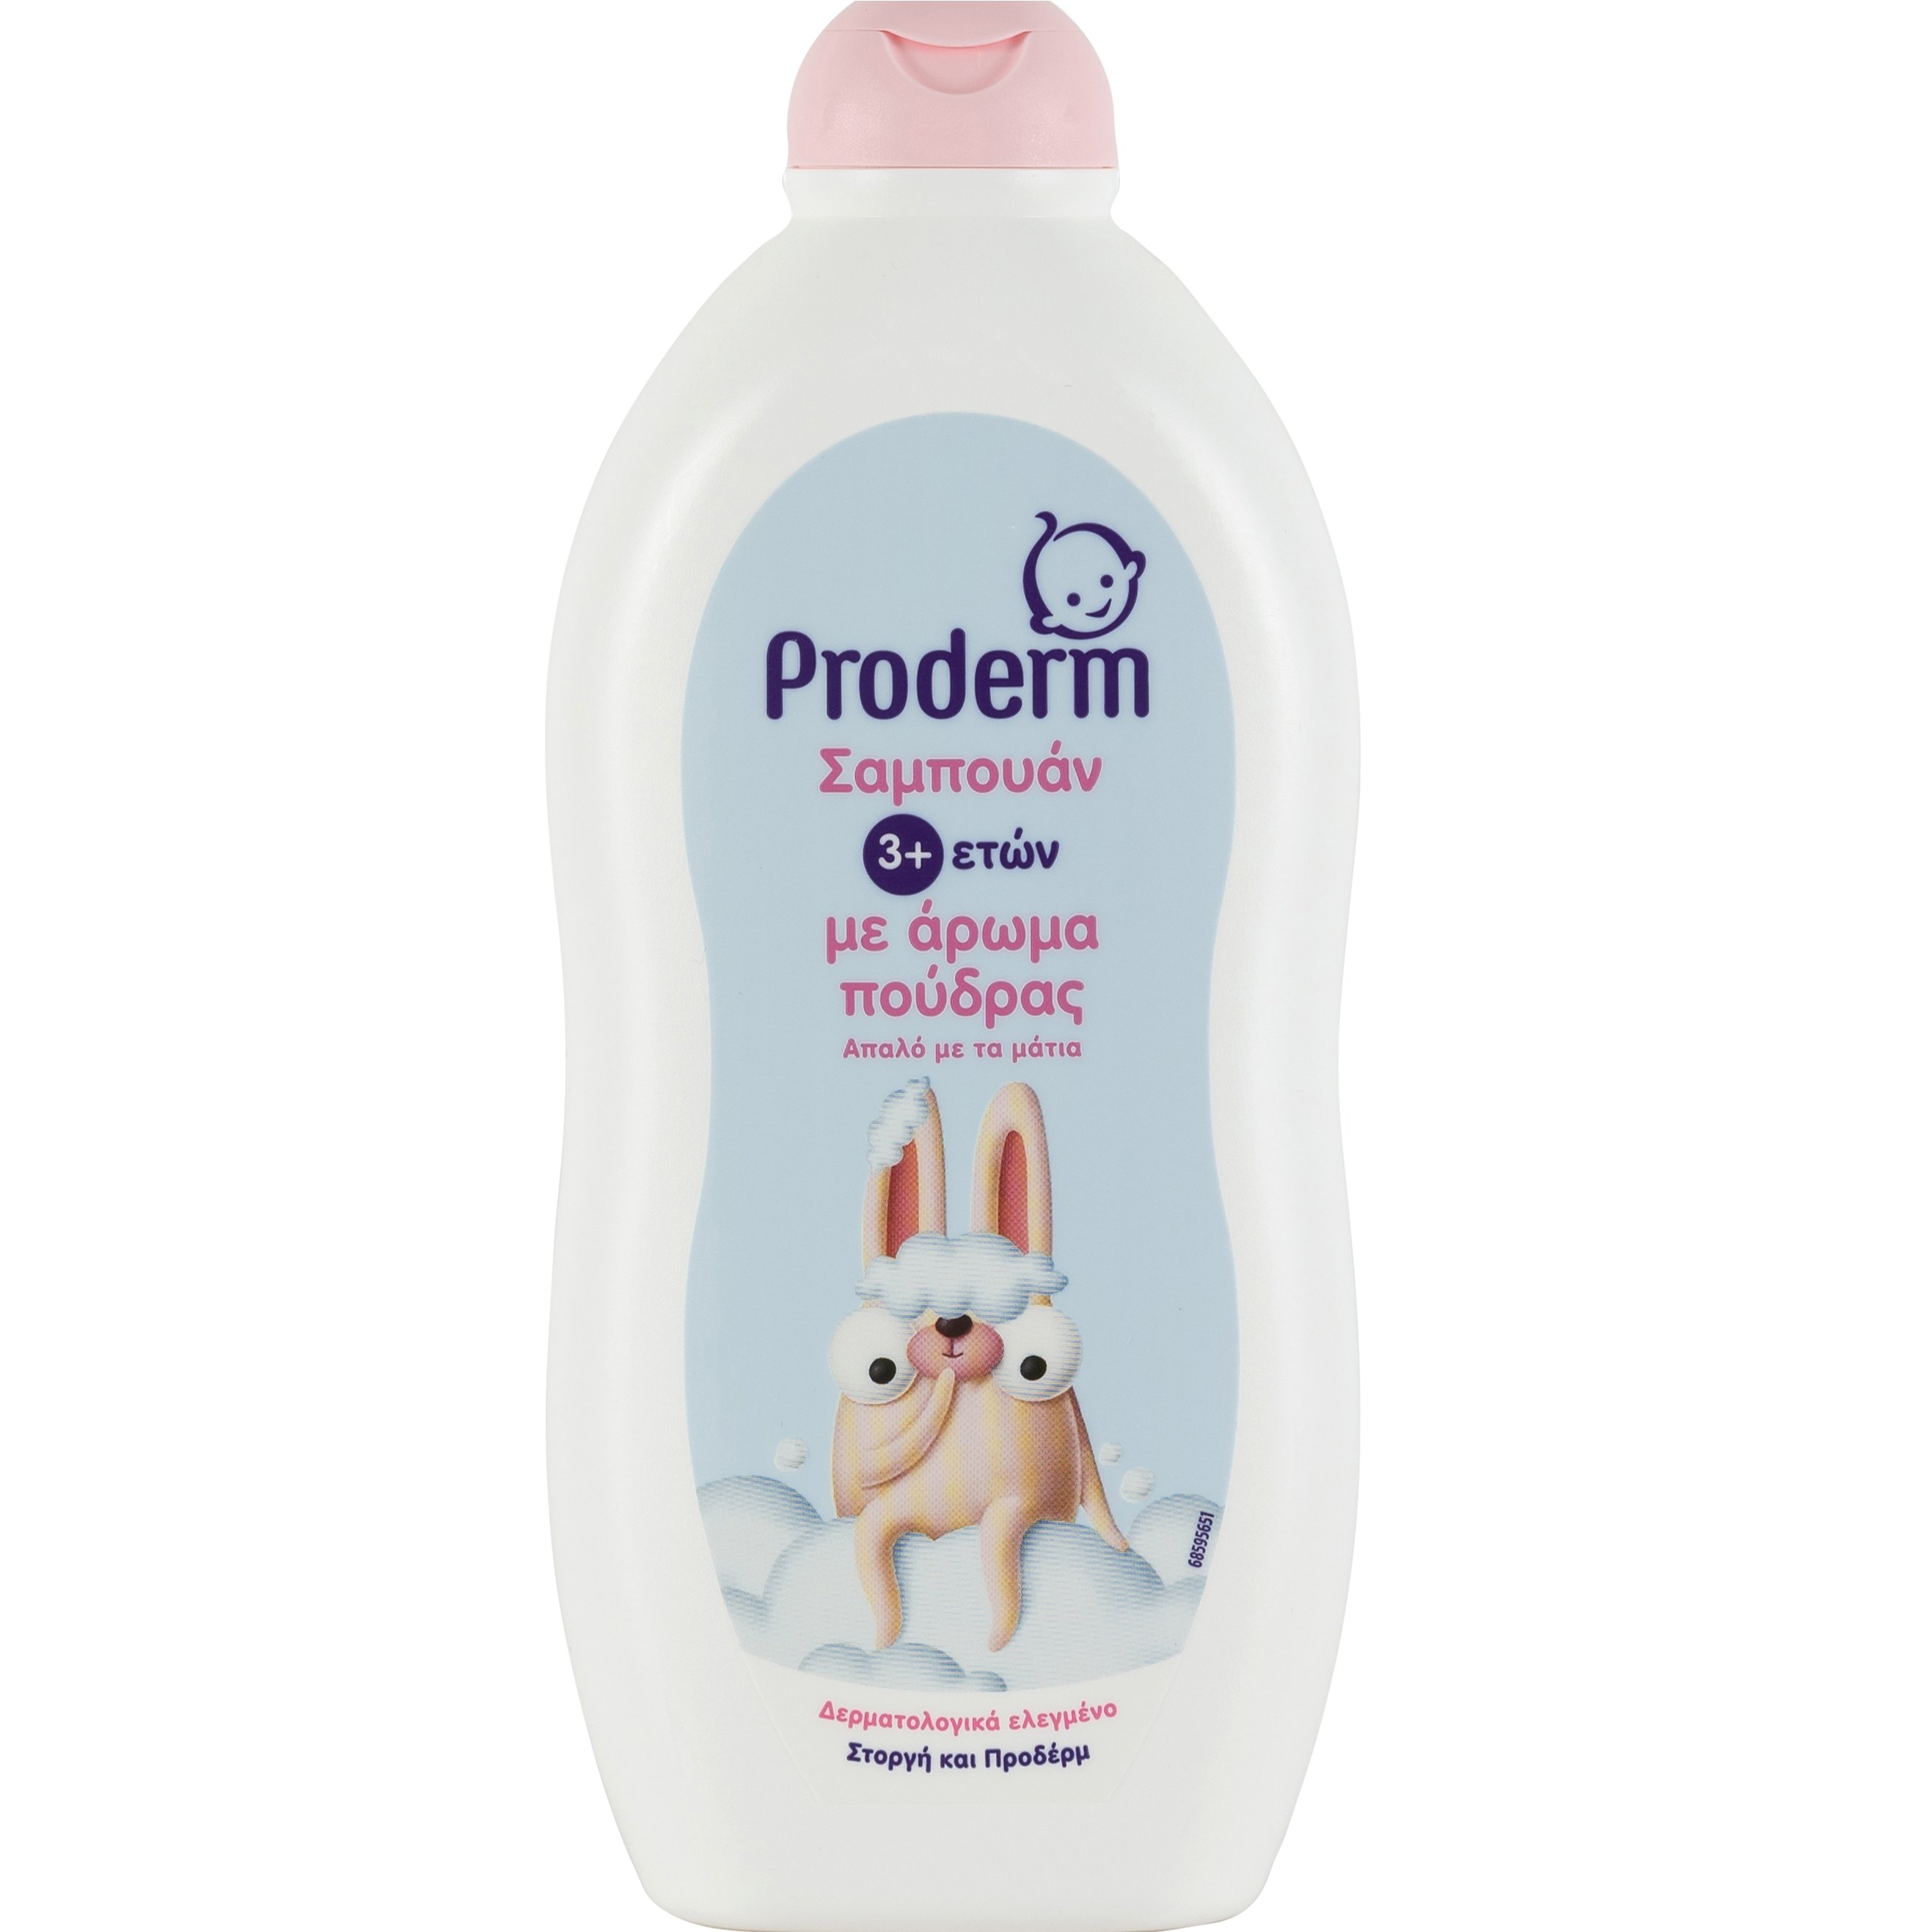 Proderm Proderm Kids Shampoo 3+ Years Παιδικό Σαμπουάν Απαλό με τα Μάτια με Άρωμα Πούδρας 500ml